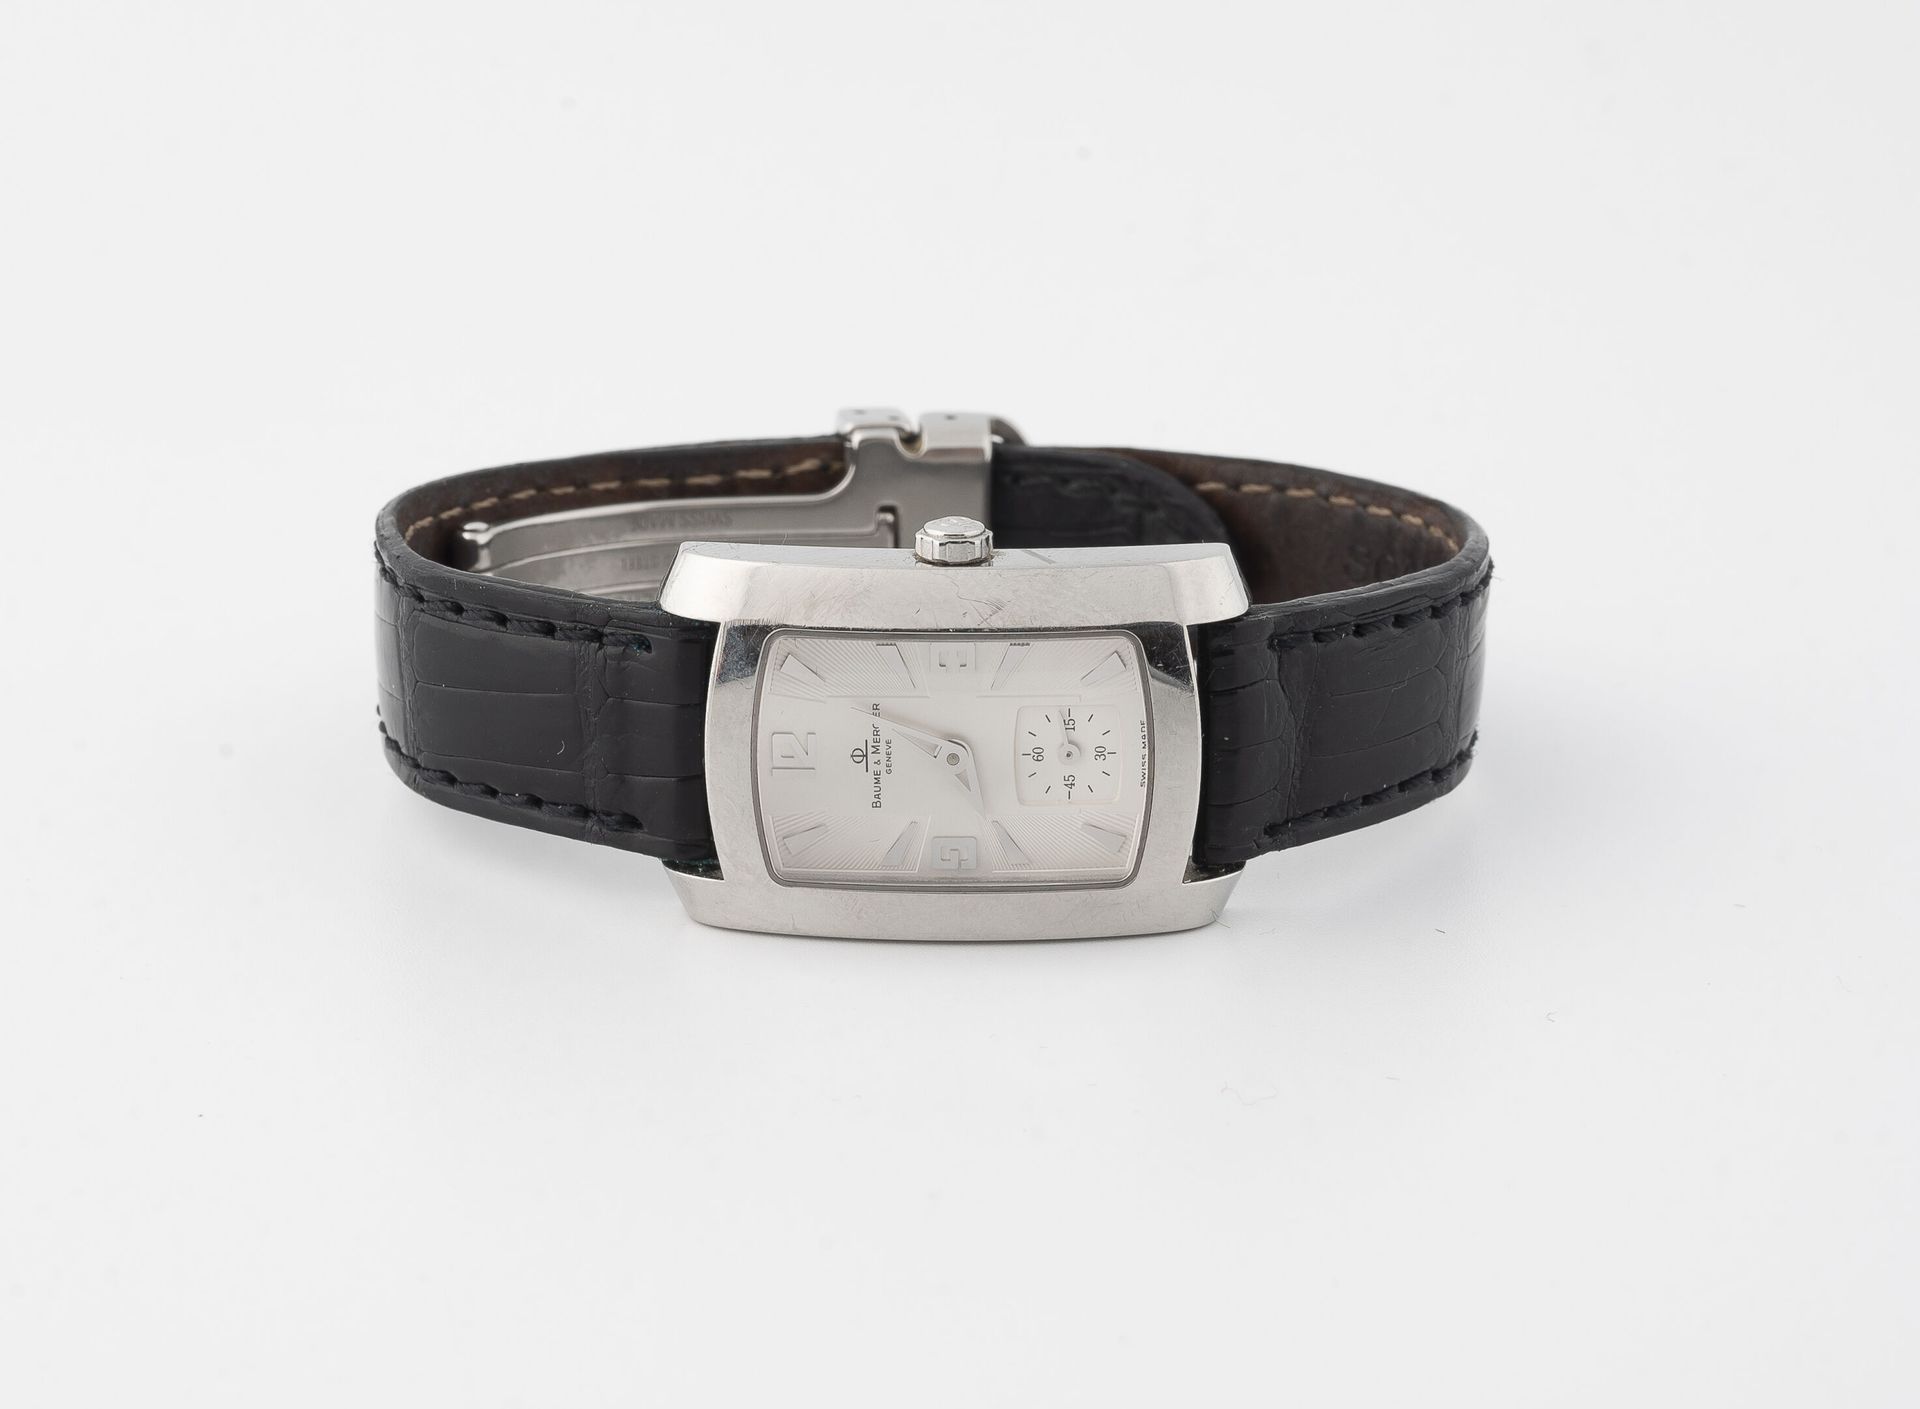 BAUME & MERCIER Lady's wrist watch.
Rectangular steel case. 
Dial with iridescen&hellip;